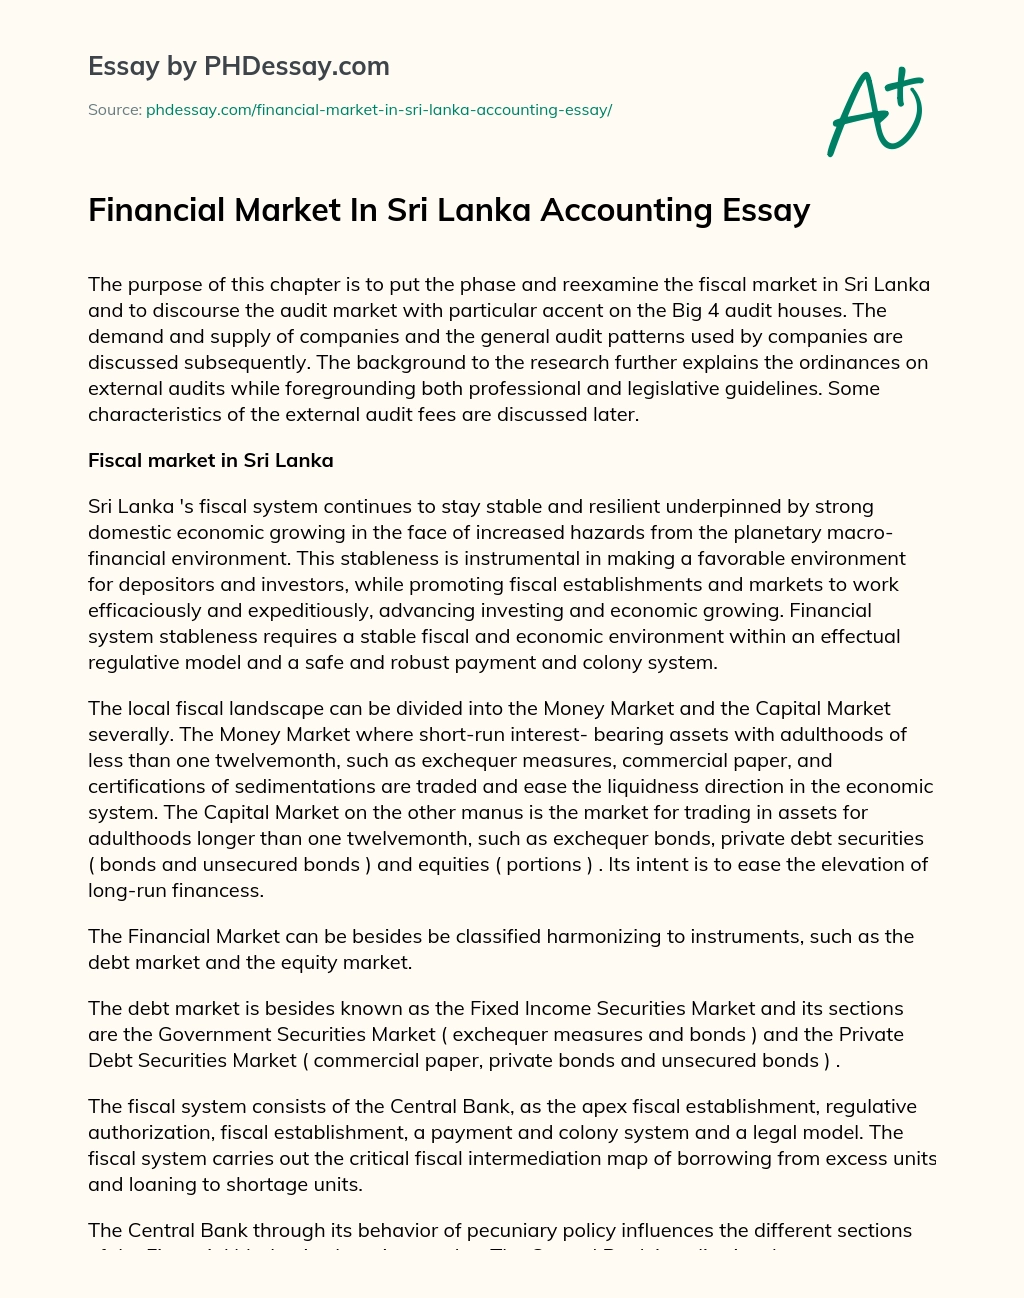 Financial Market In Sri Lanka essay